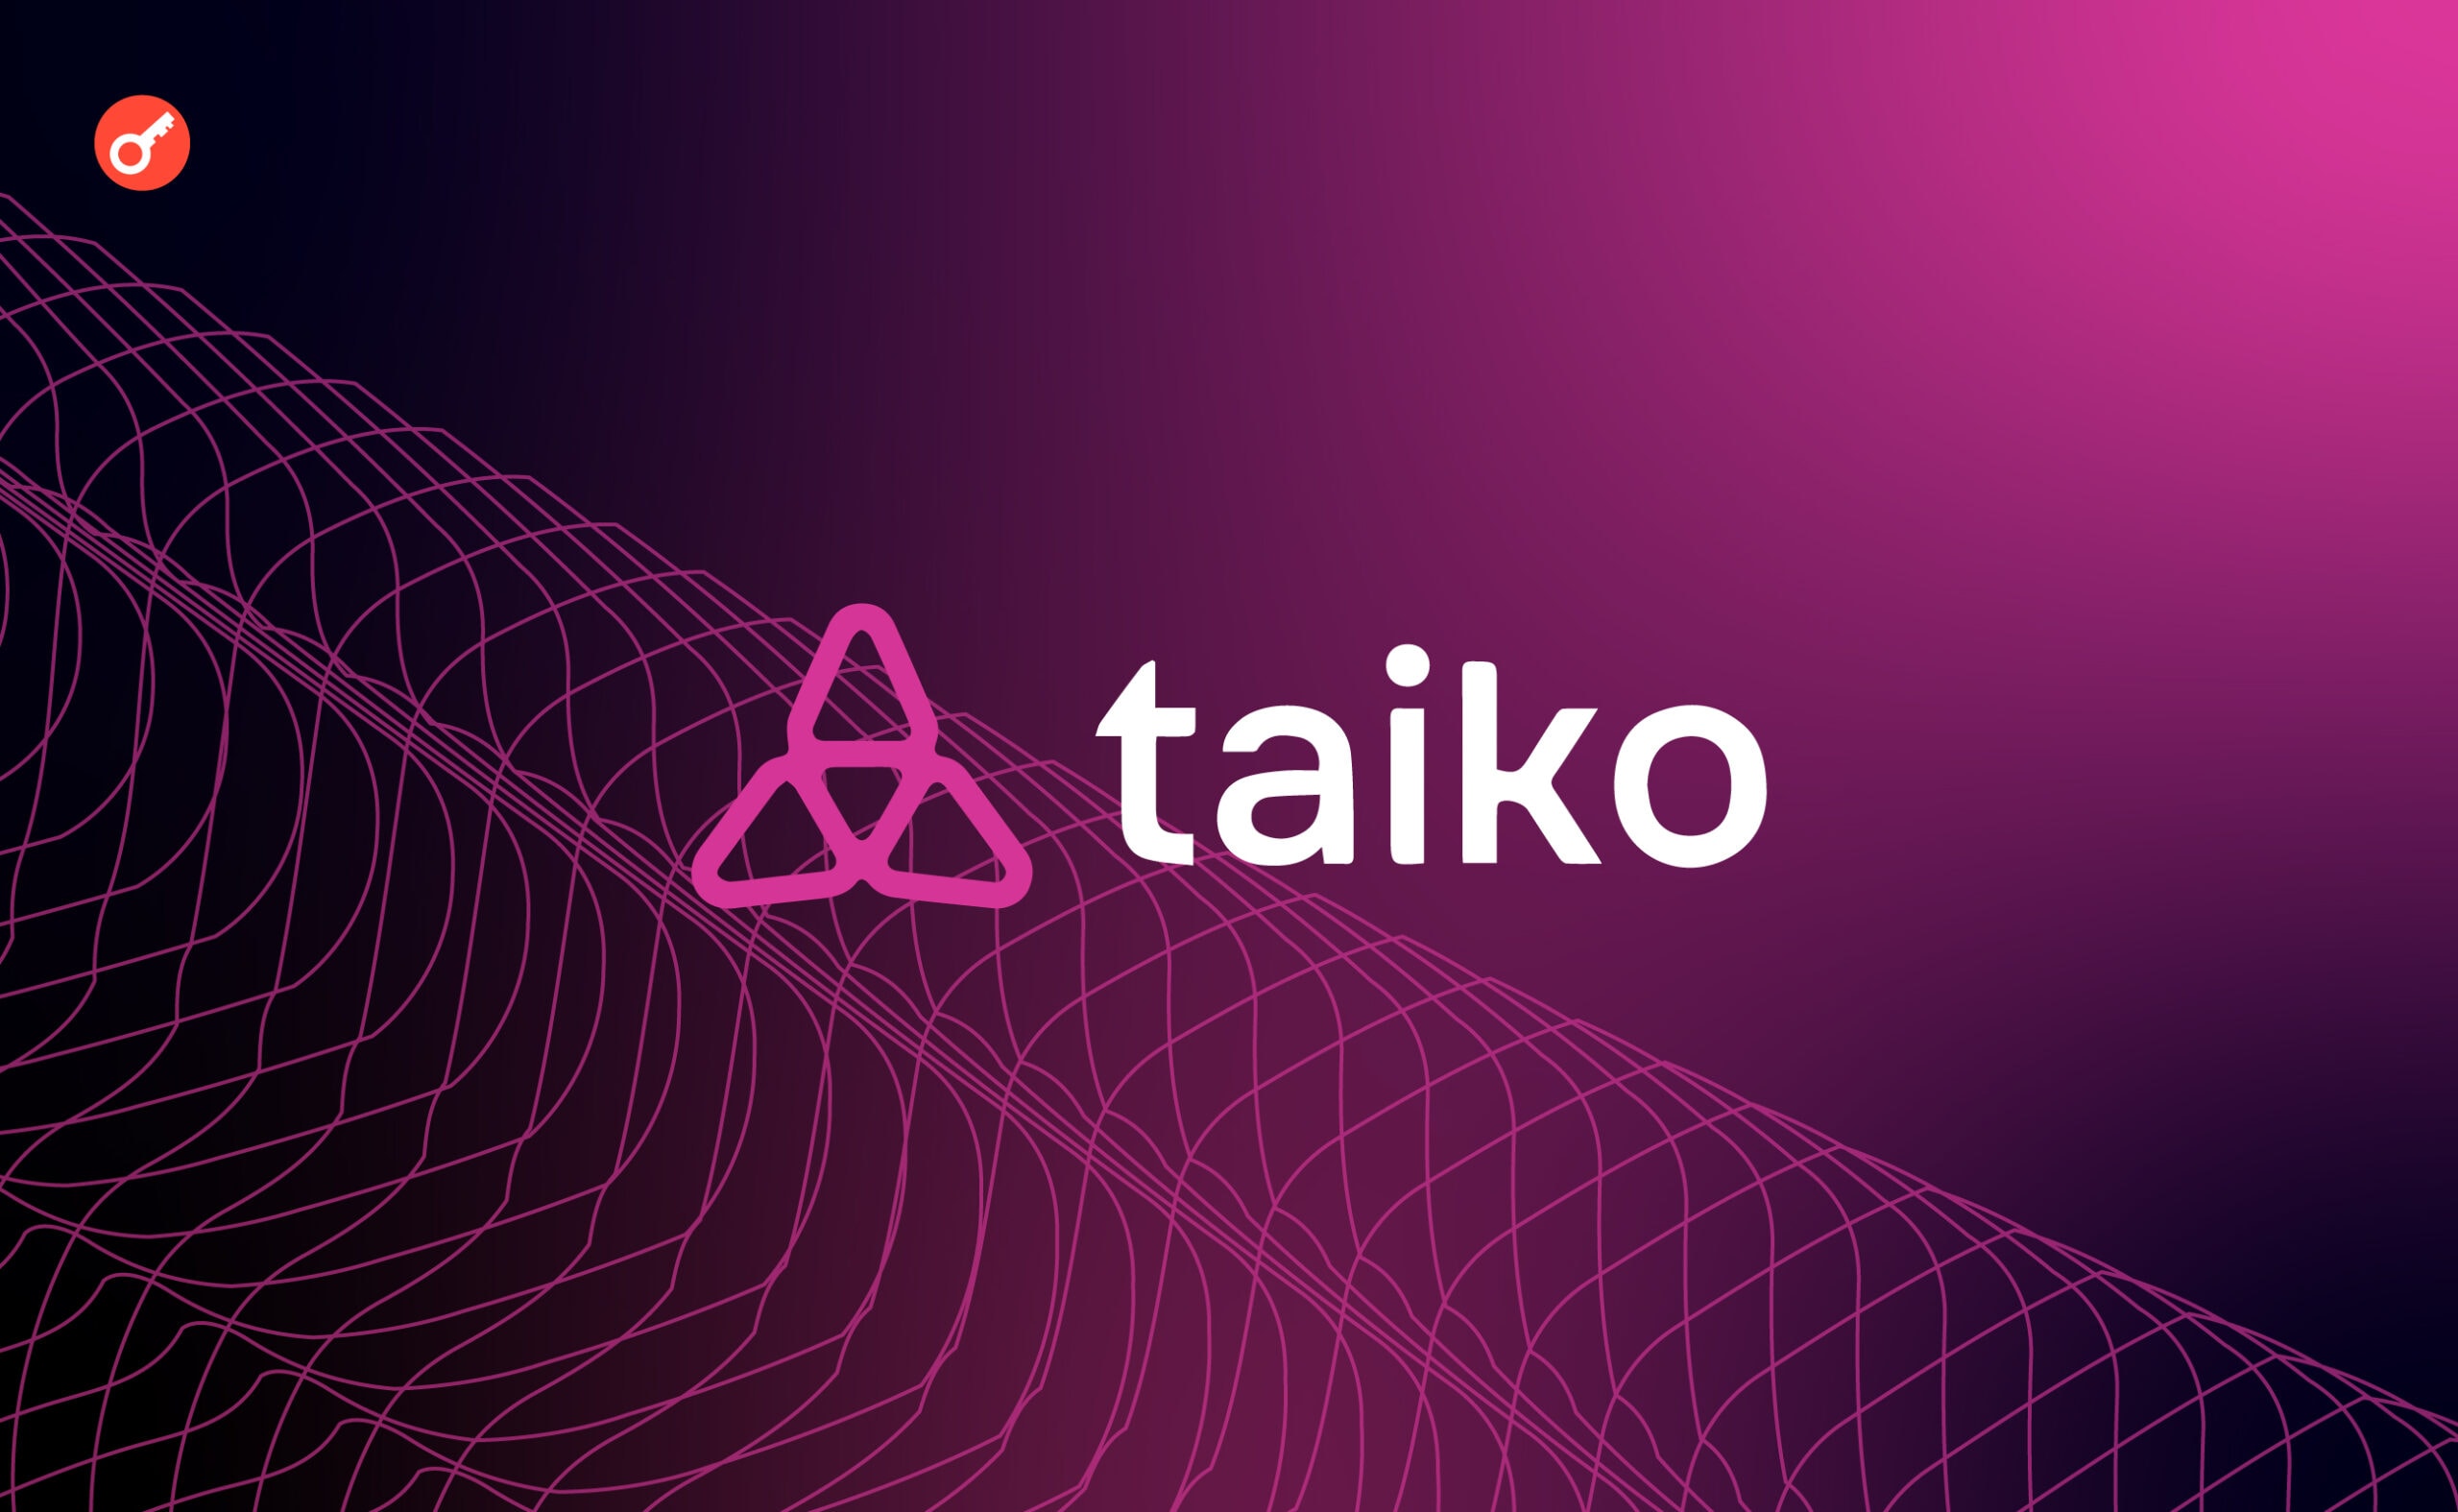 L2-проект Taiko привлек $15 млн инвестиций. Заглавный коллаж новости.